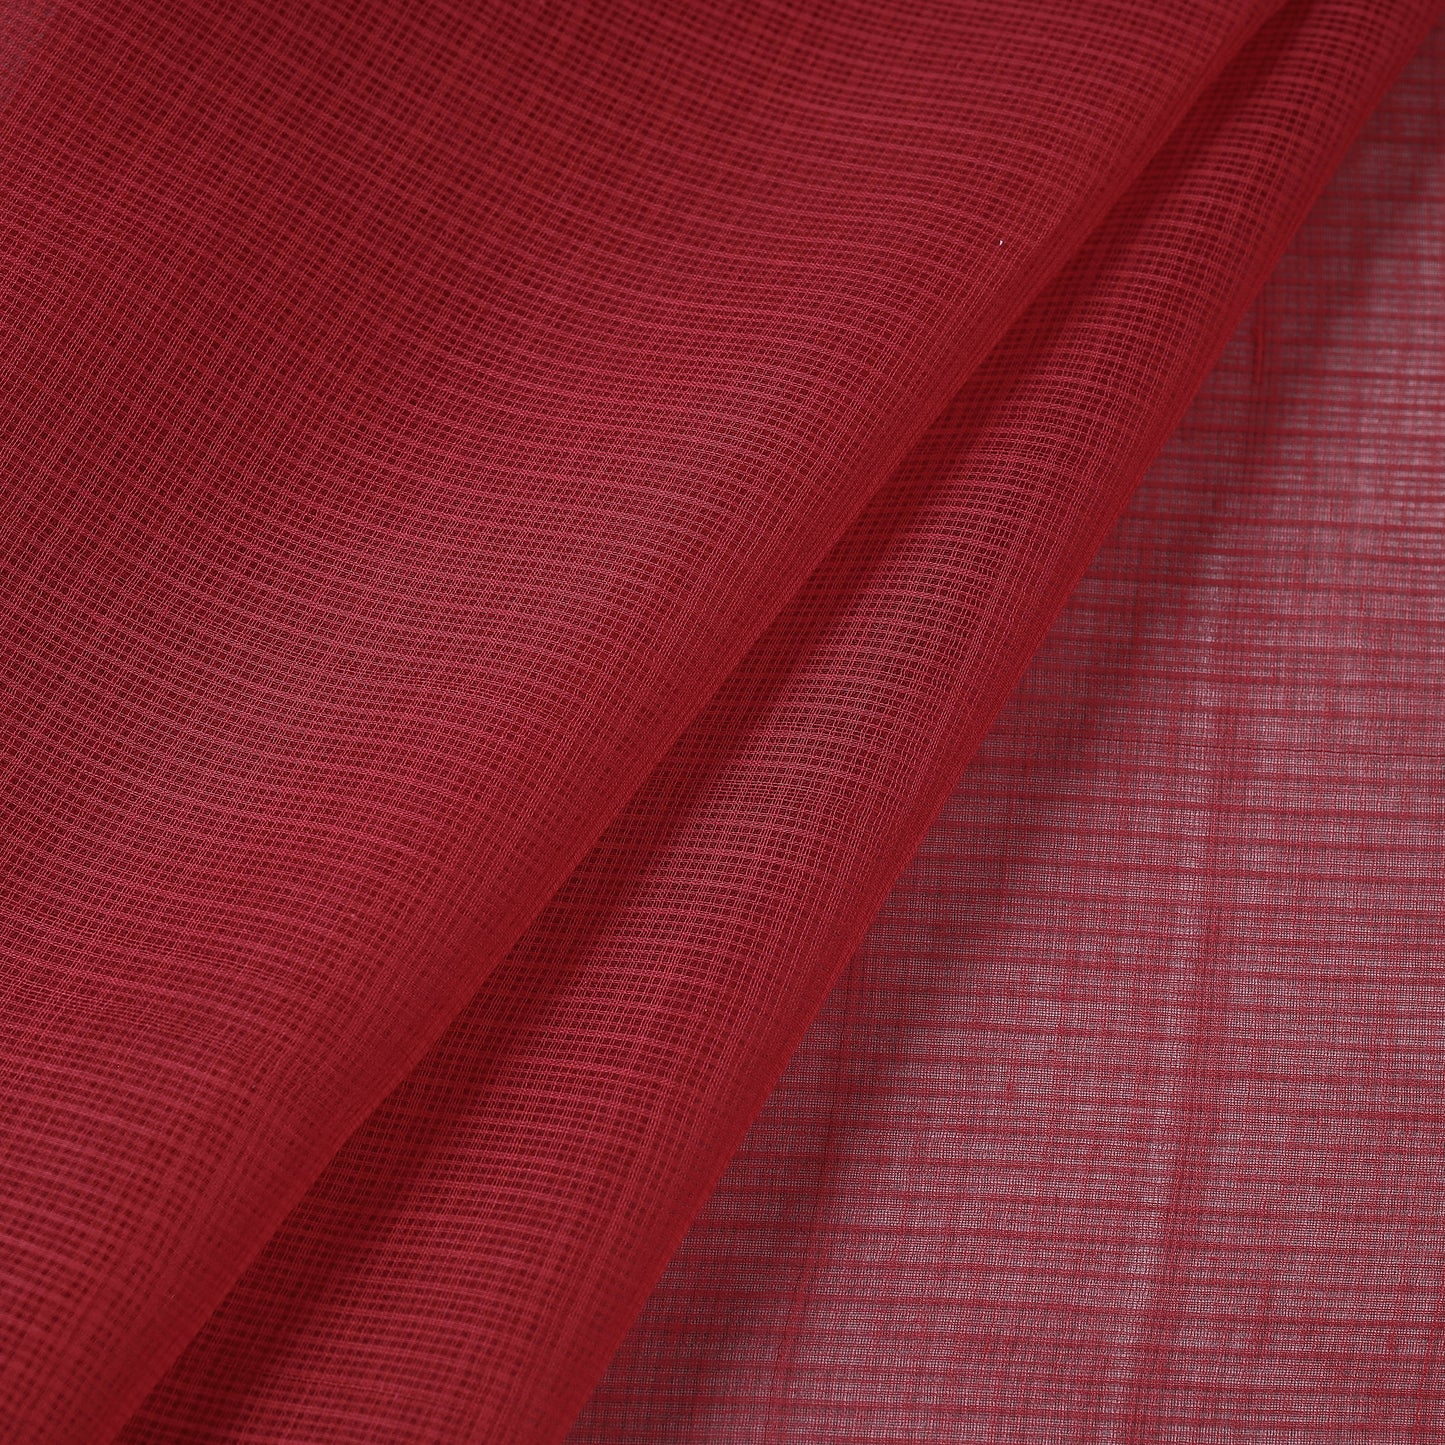 Red - Kota Doria Weaving Plain Cotton Fabric 10